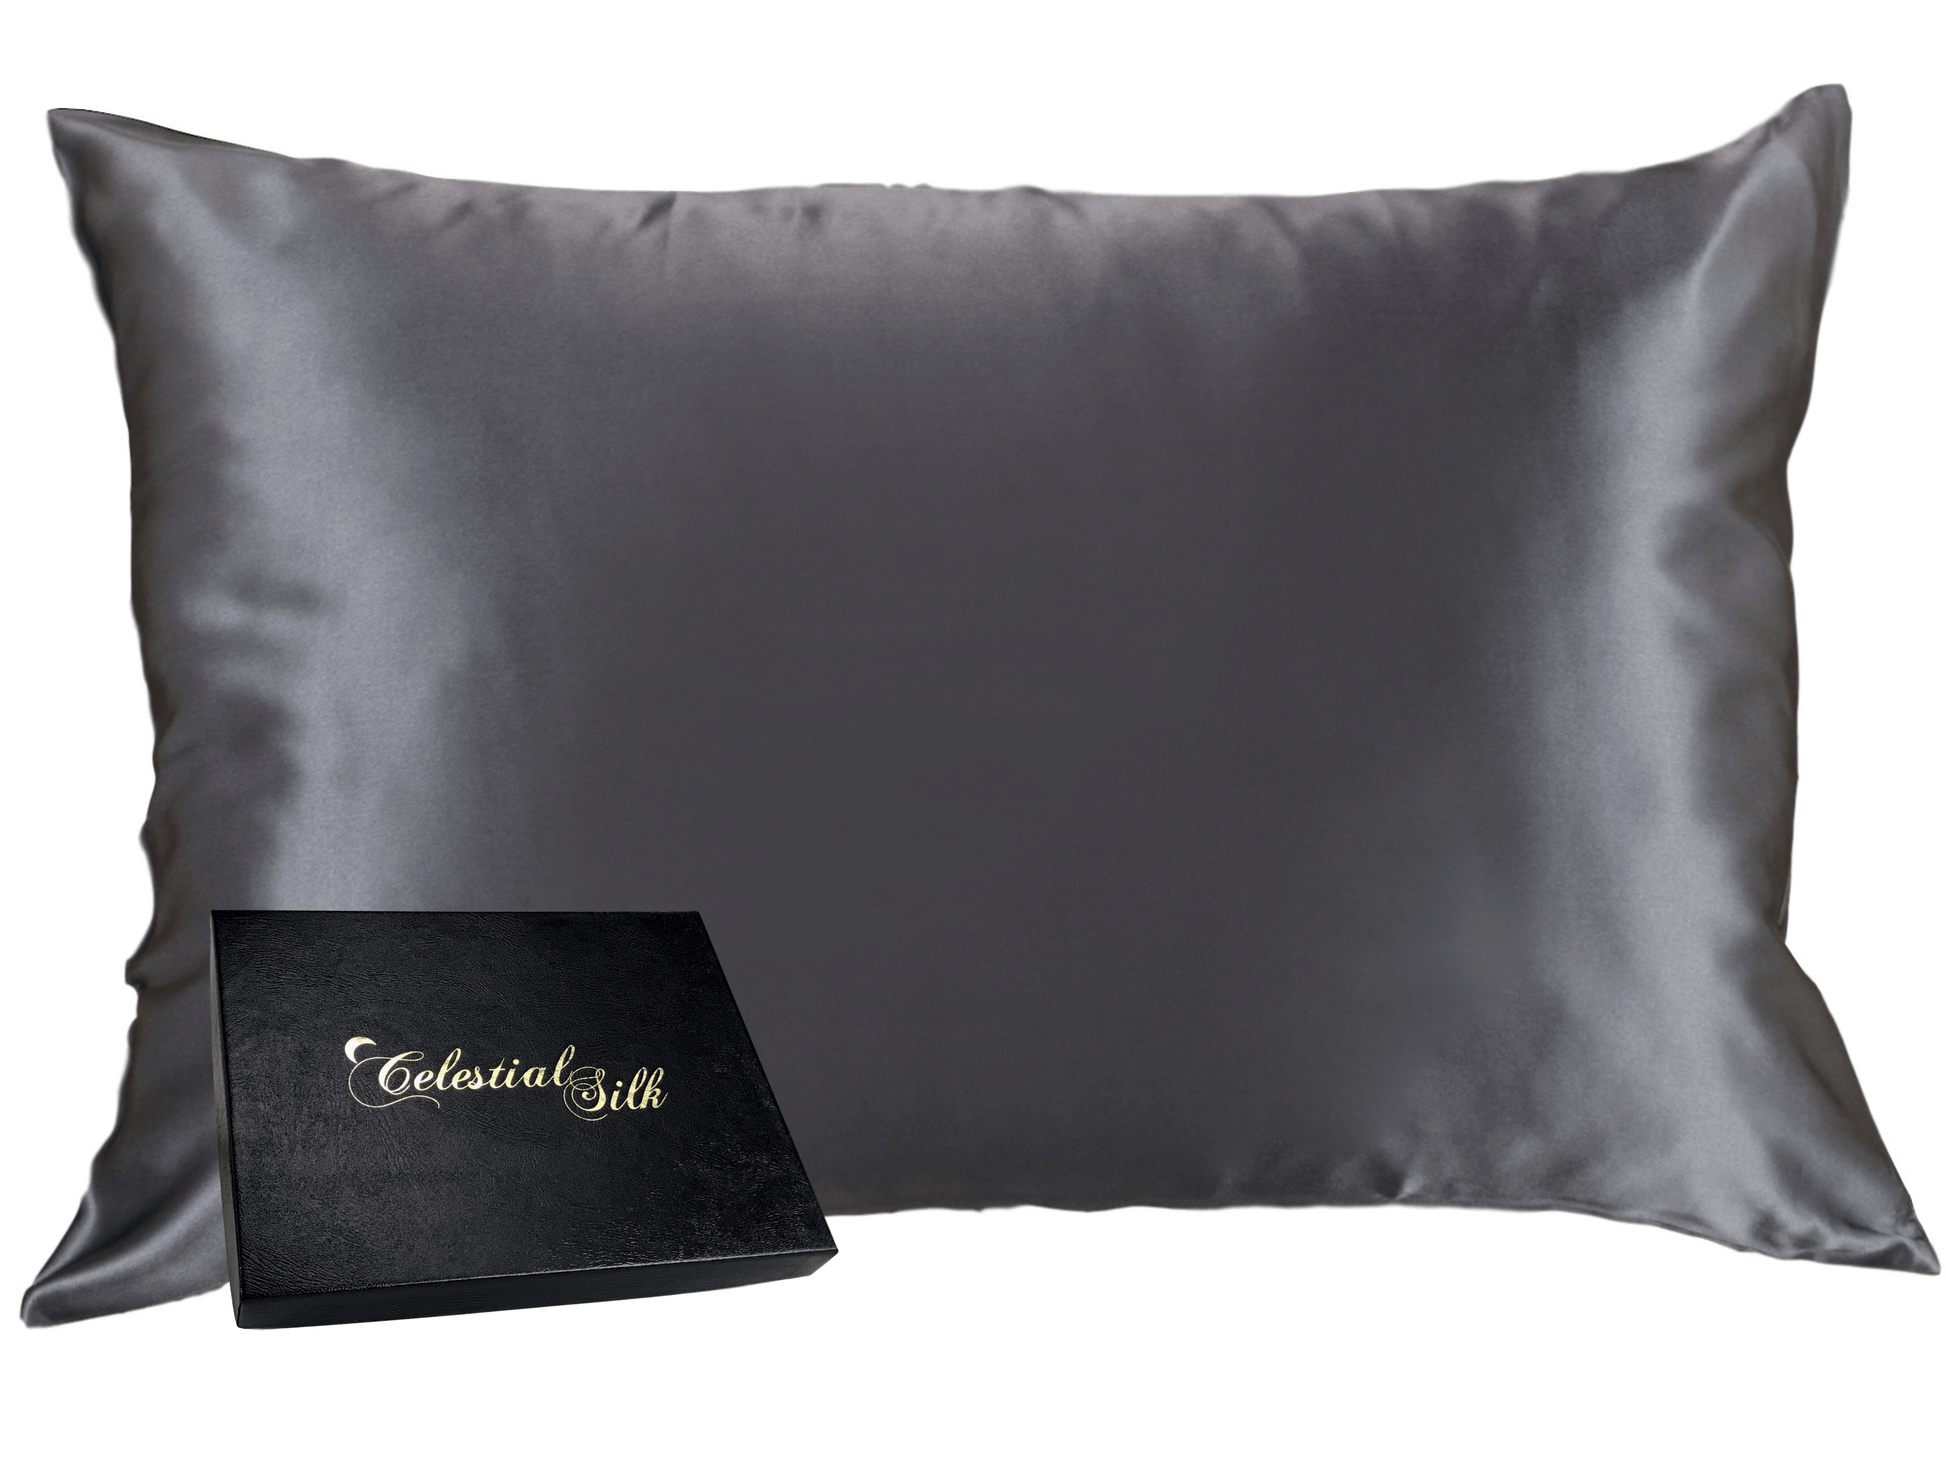 Celestial Silk charcoal gray mulberry silk pillowcase